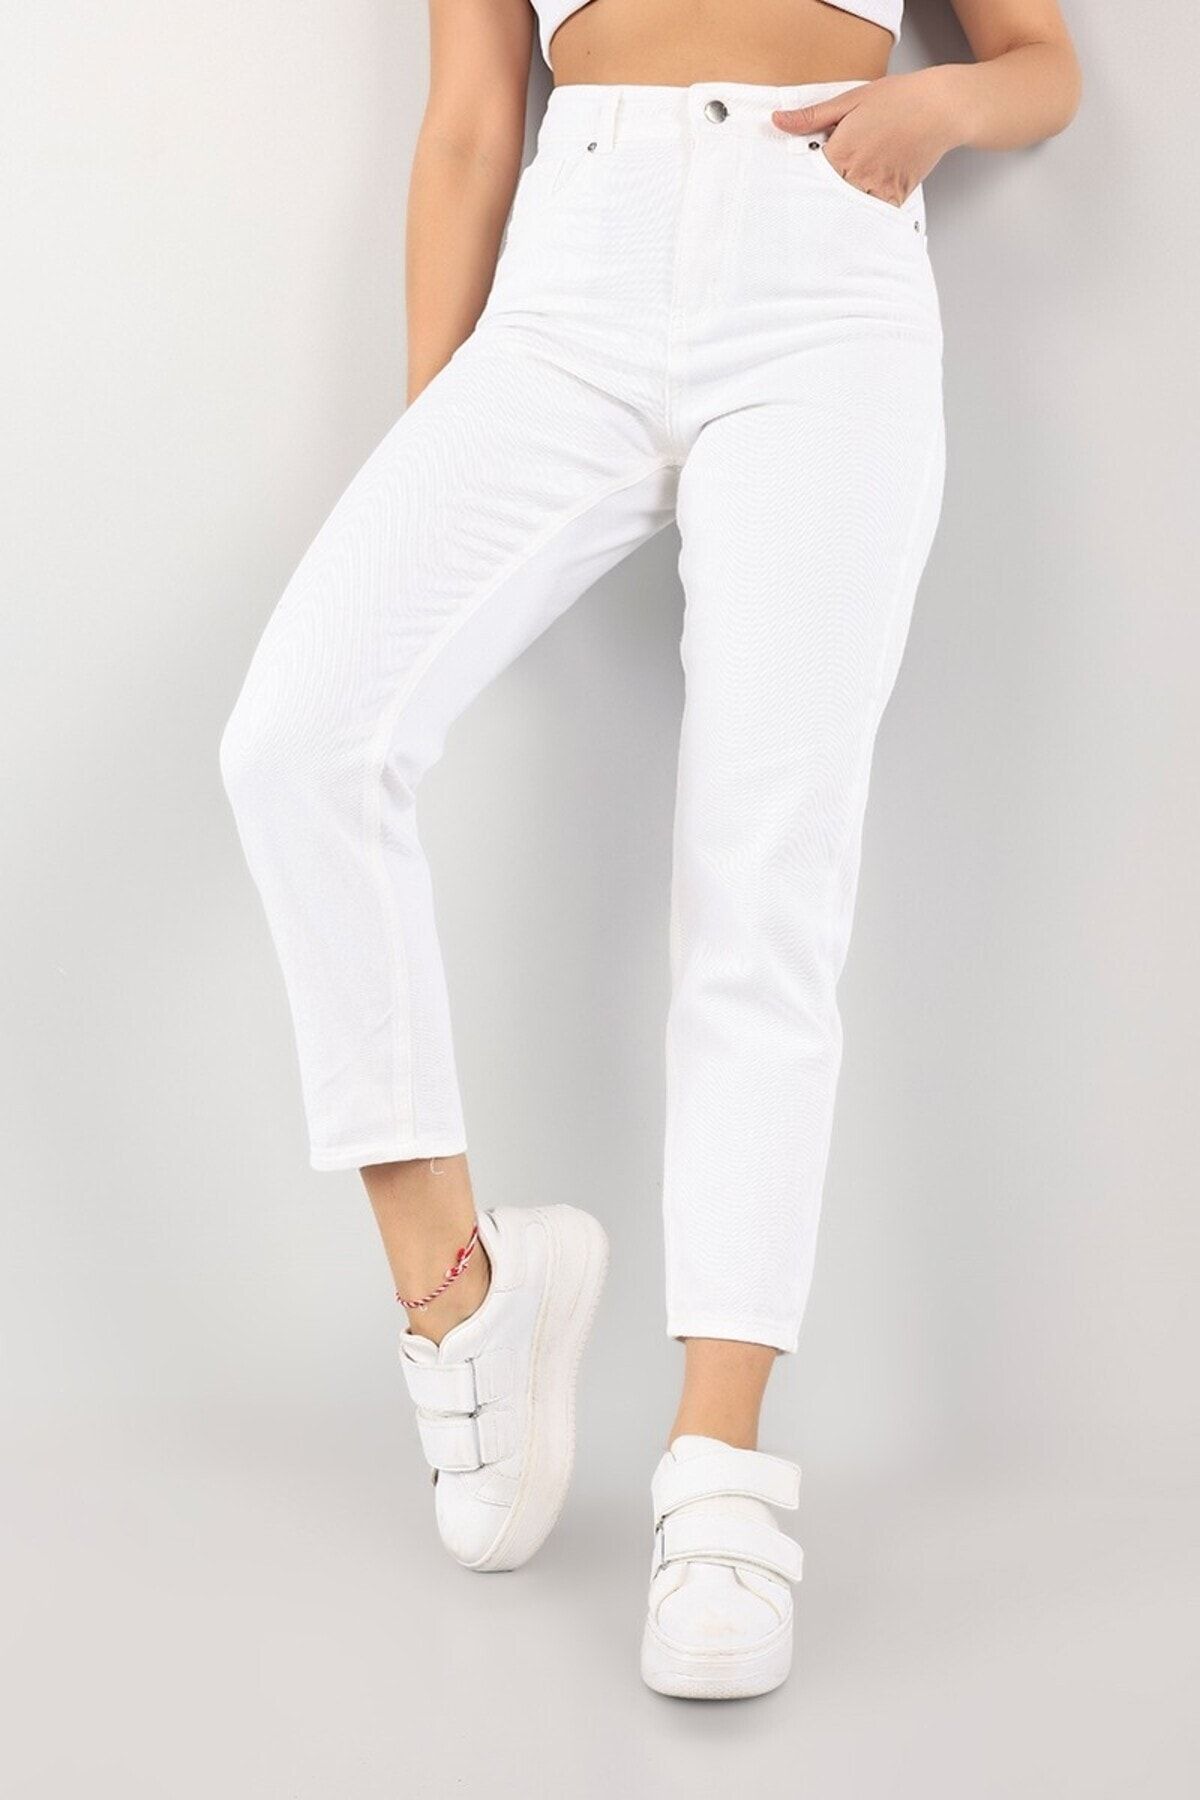 LİMABEL Yüksek Bel Likralı Beyaz Mom Jeans Esnek Kot Pantolon